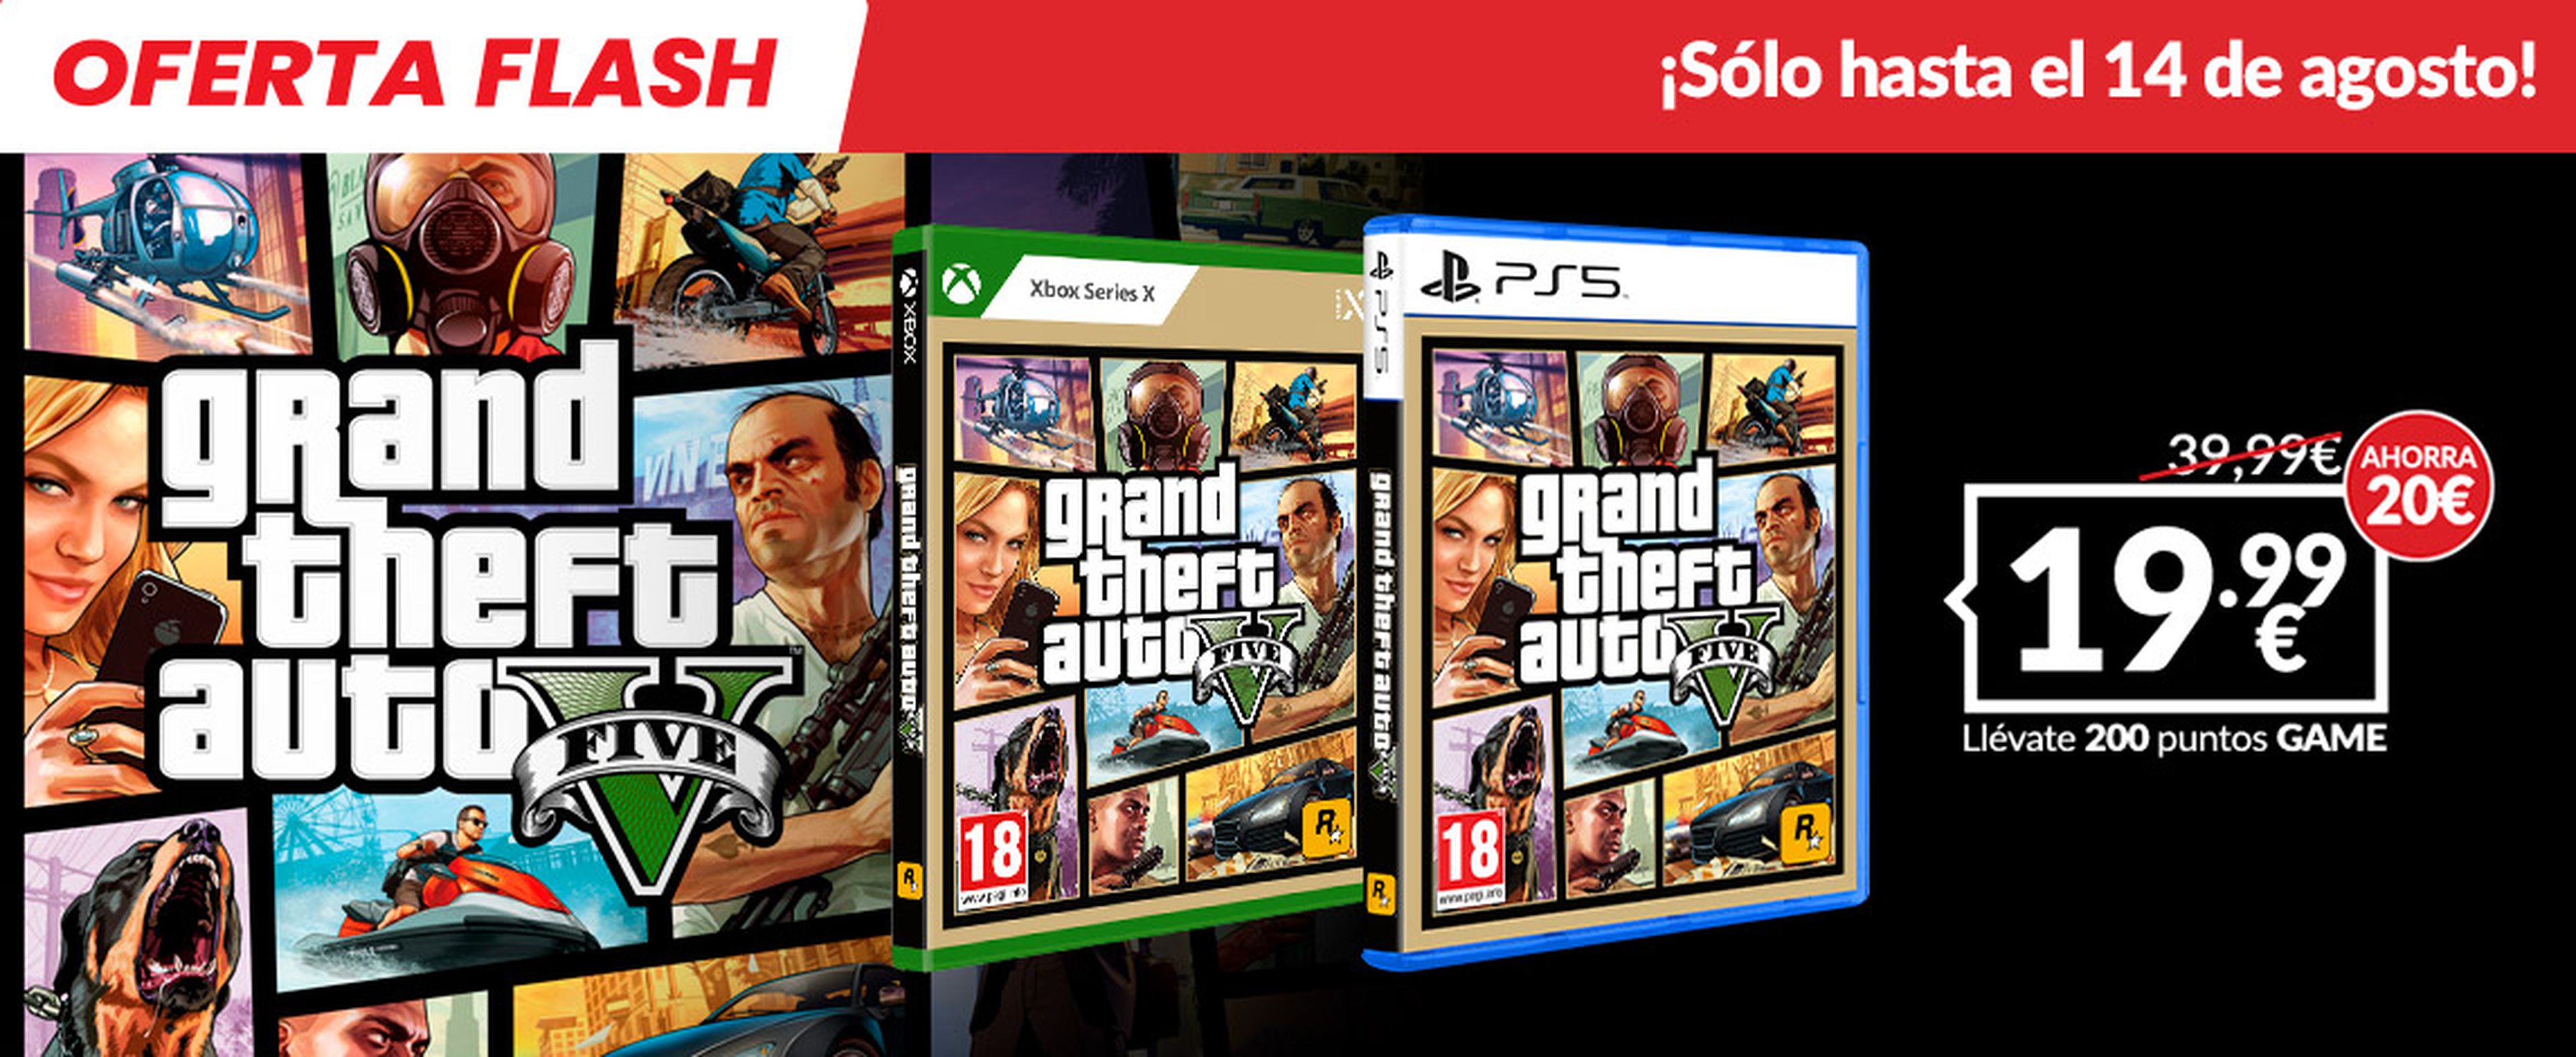 GTA 5 custa 9,99€ na PS5 e 19,99€ na Xbox Series